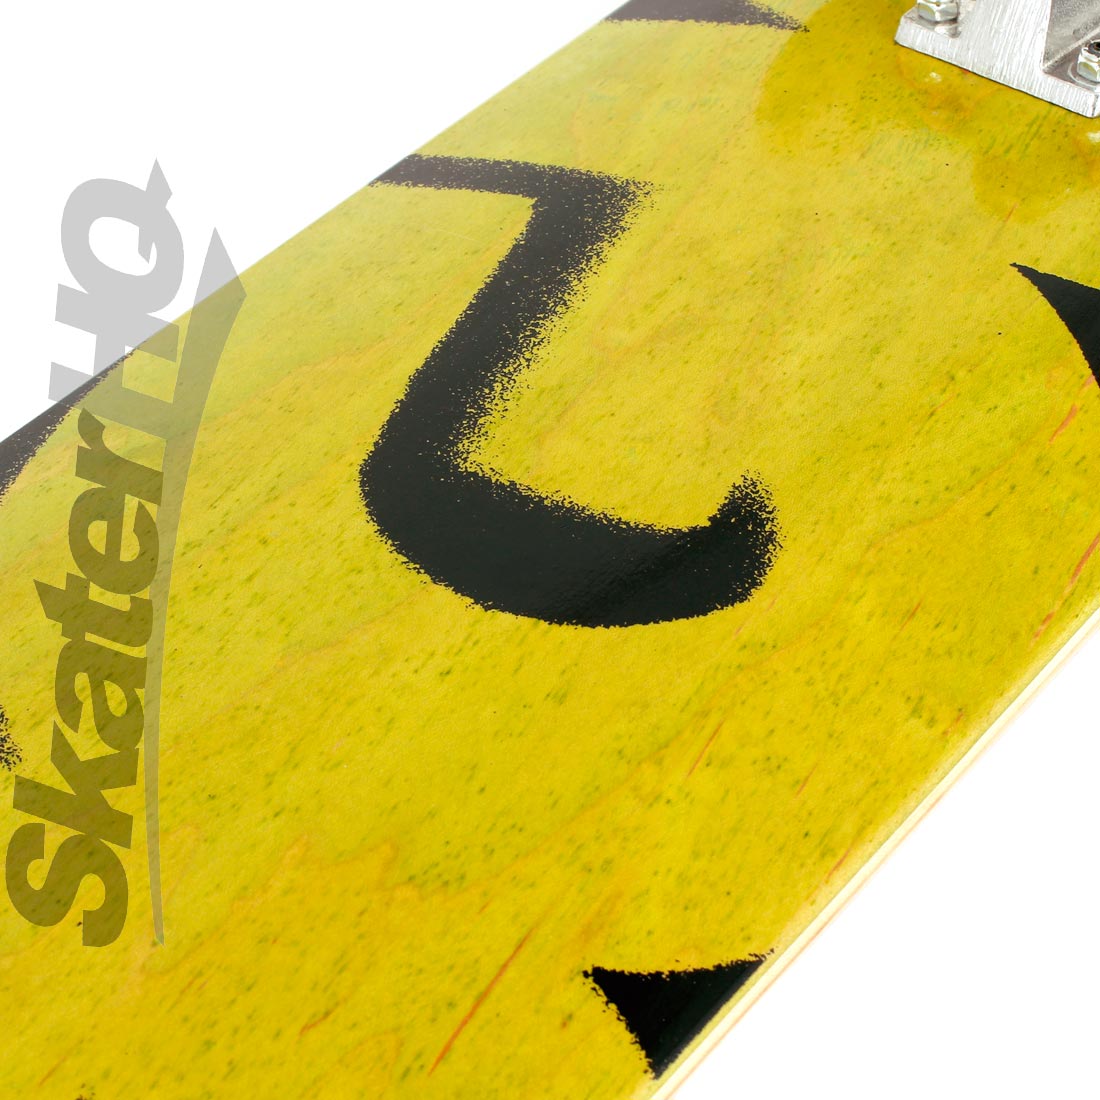 DGK Stencil 7.75 Complete - Yellow Skateboard Completes Modern Street